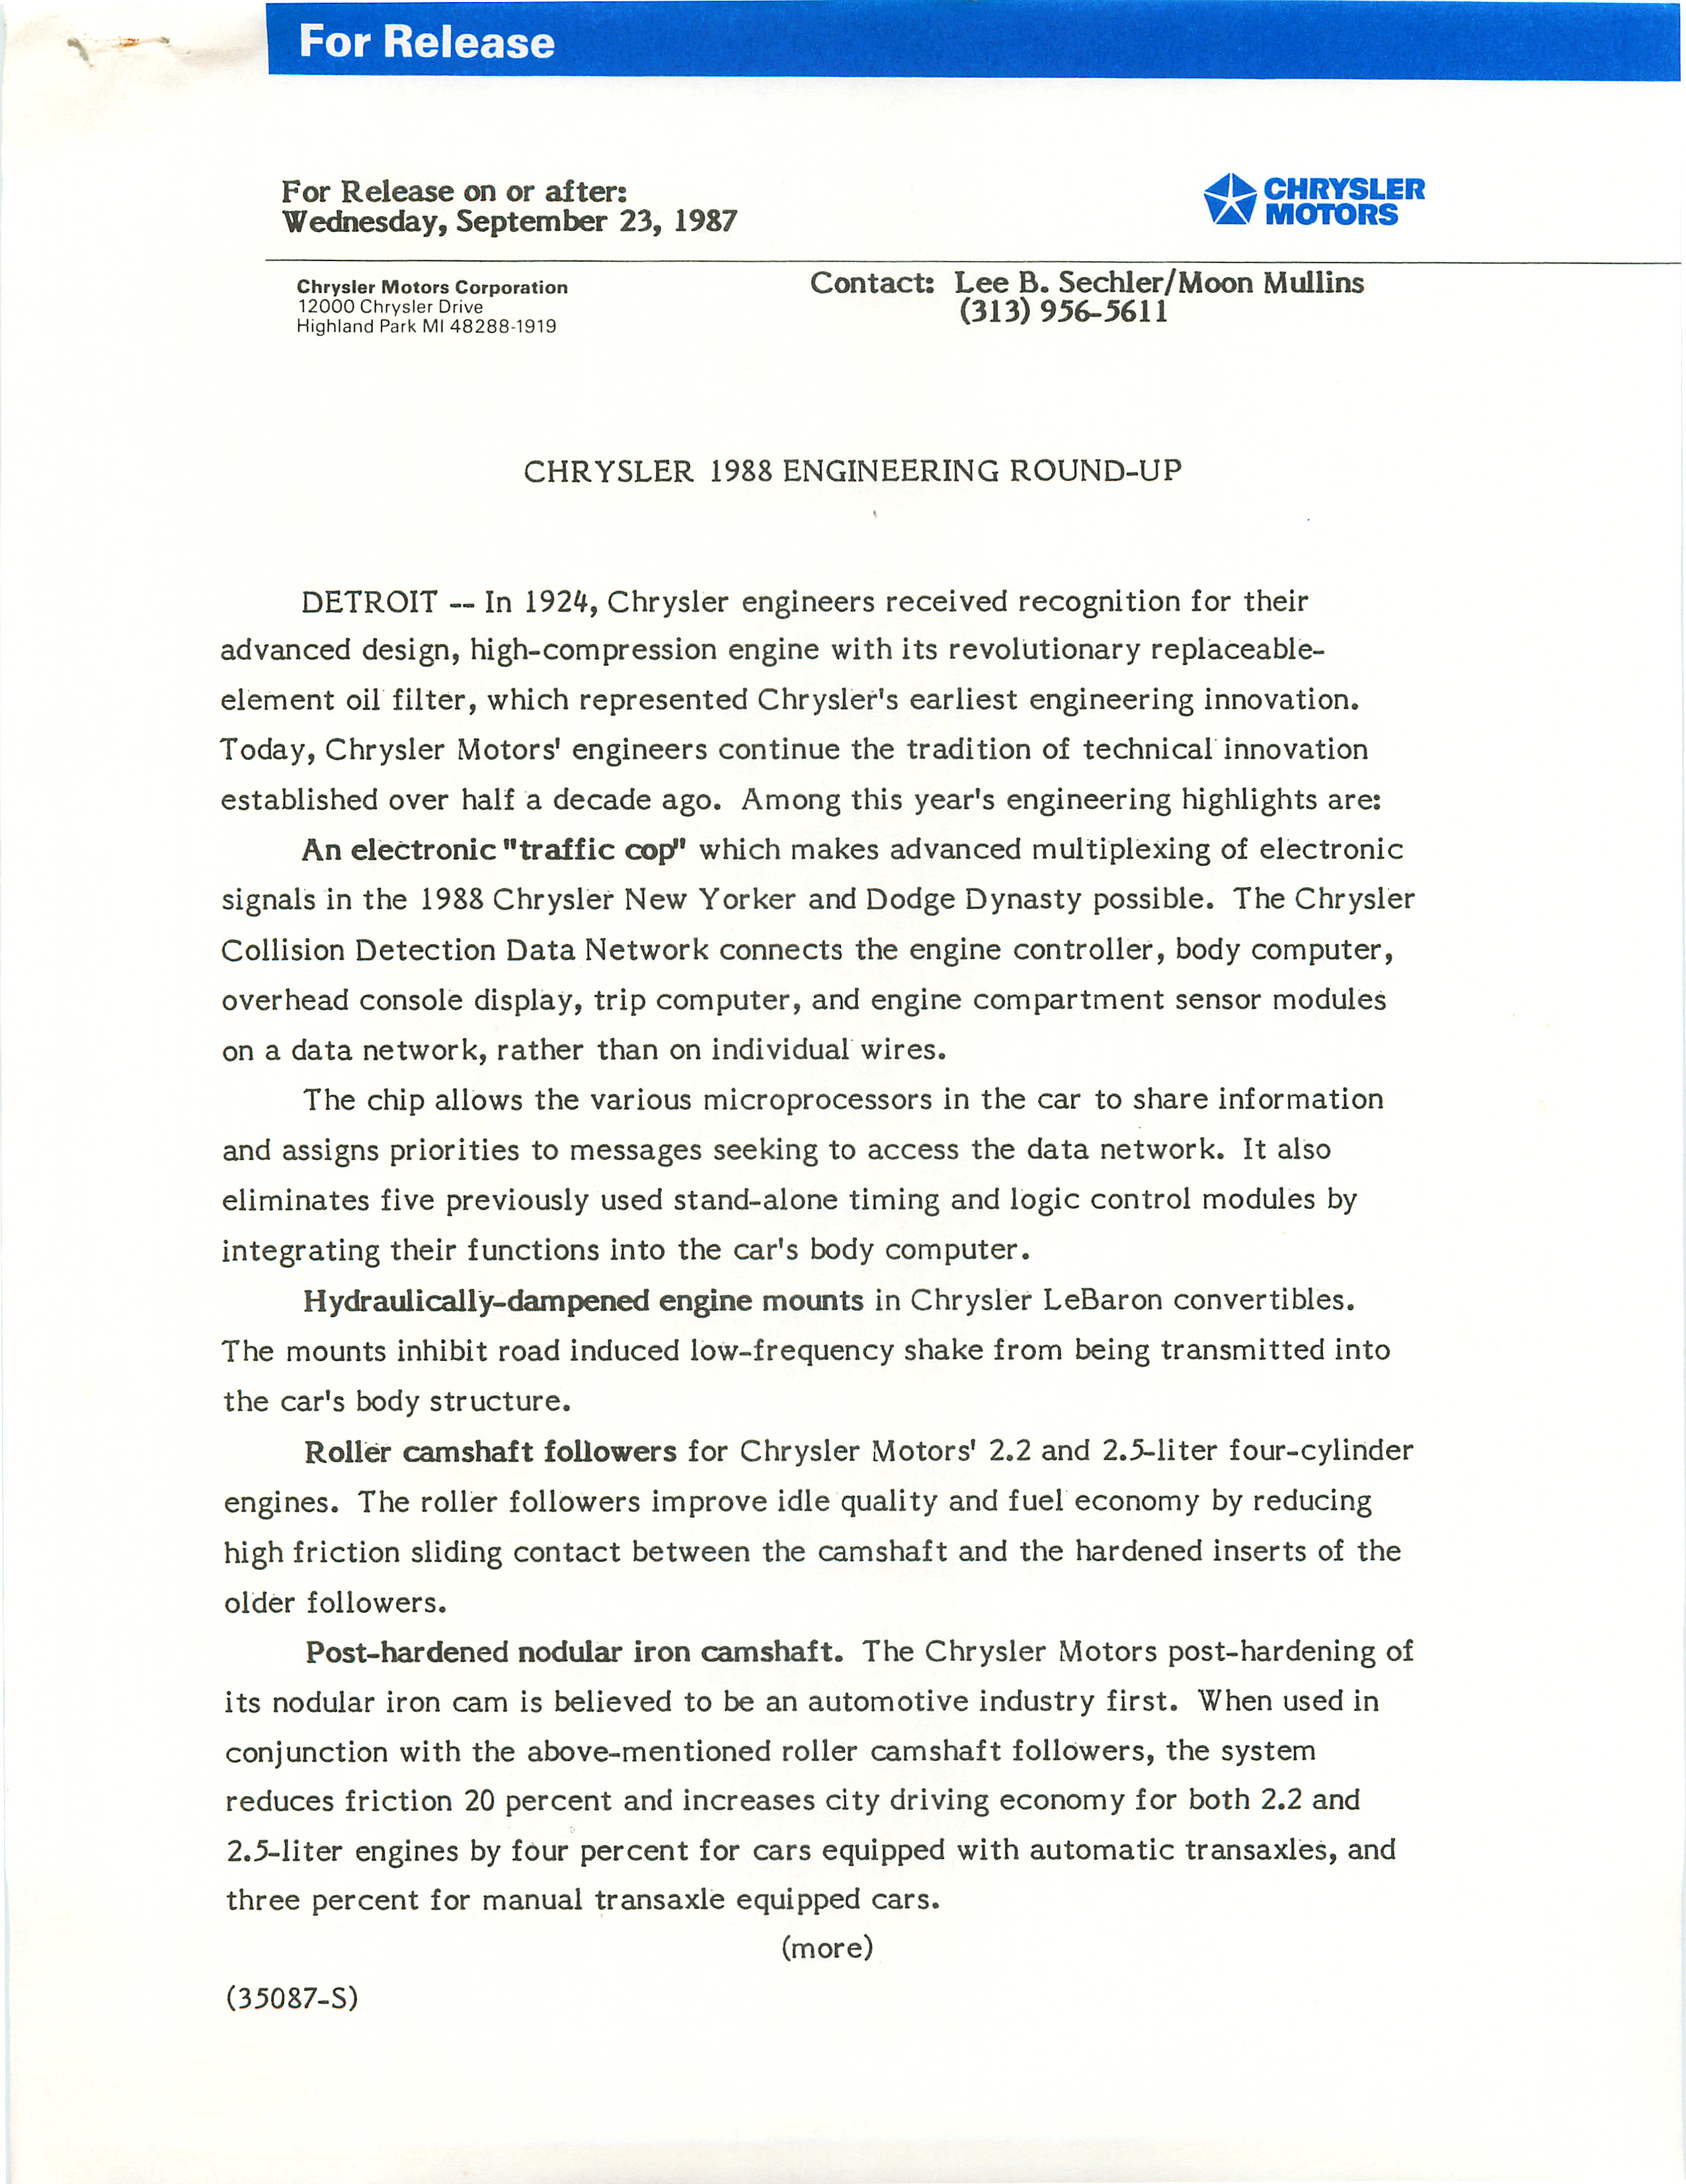 1988 Chrysler Intro Press Release-01